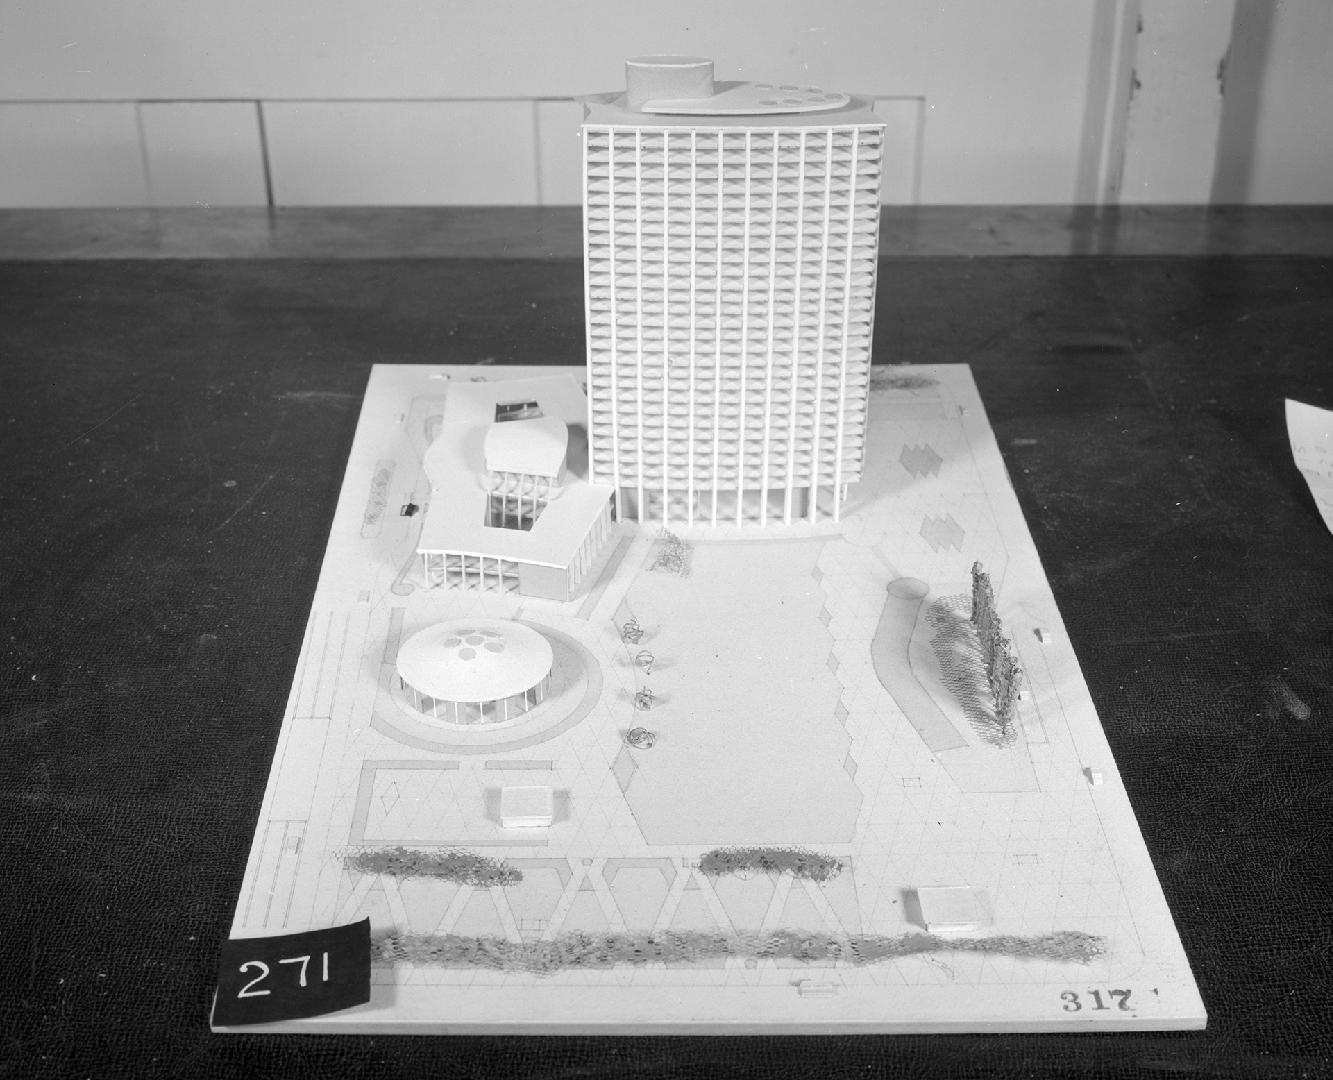 Govan Ferguson Lindsay Kaminker Langley Keeleyside entry, City Hall and Square Competition, Toronto, 1958, architectural model